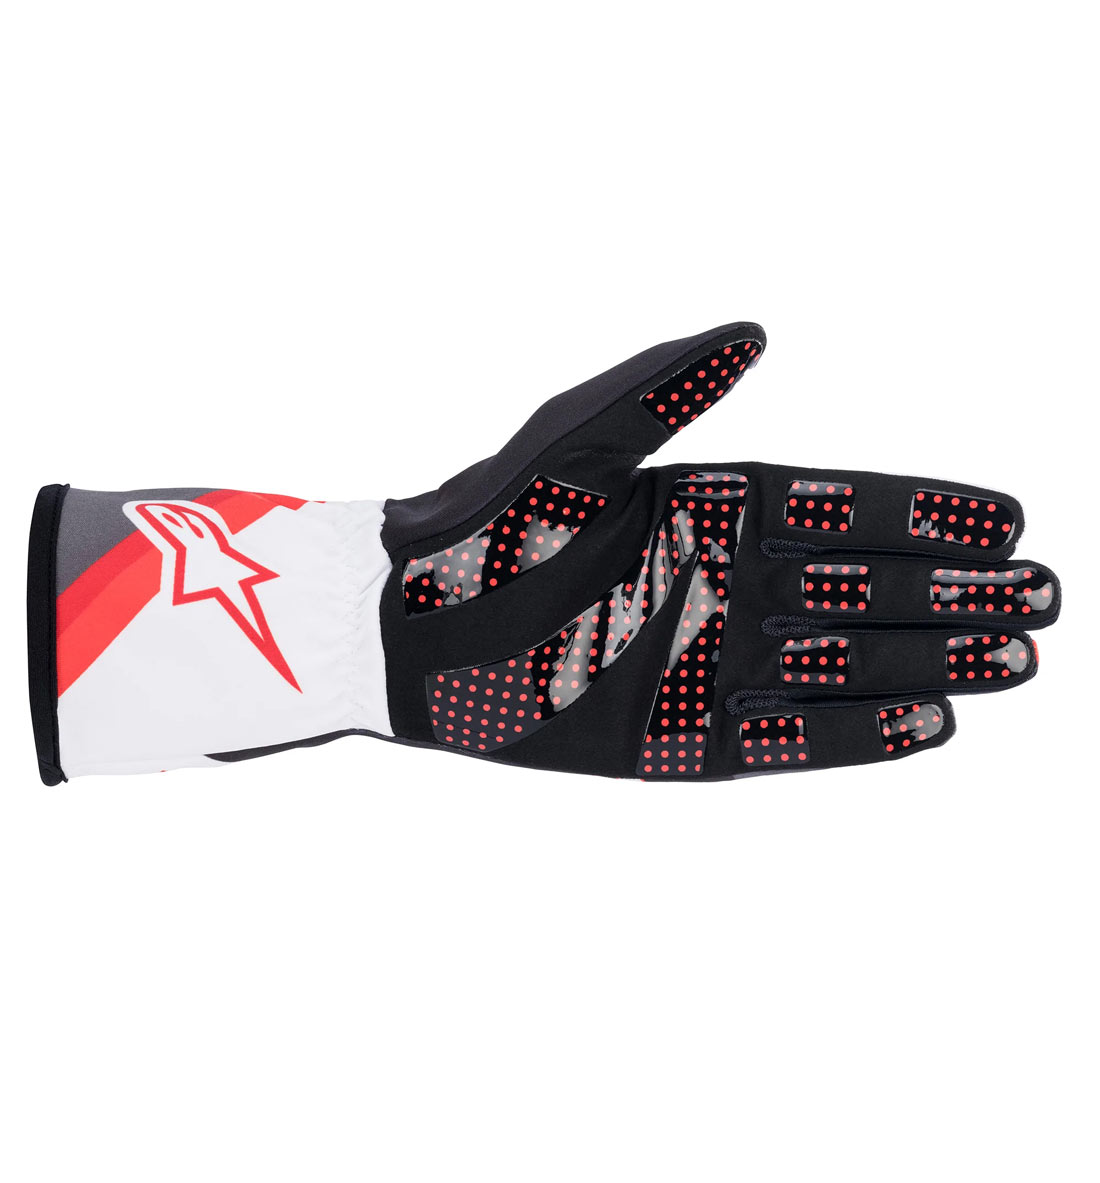 Alpinstars Tech-1 K V2 Graphic Gloves - Black/White/Anthracite/Red